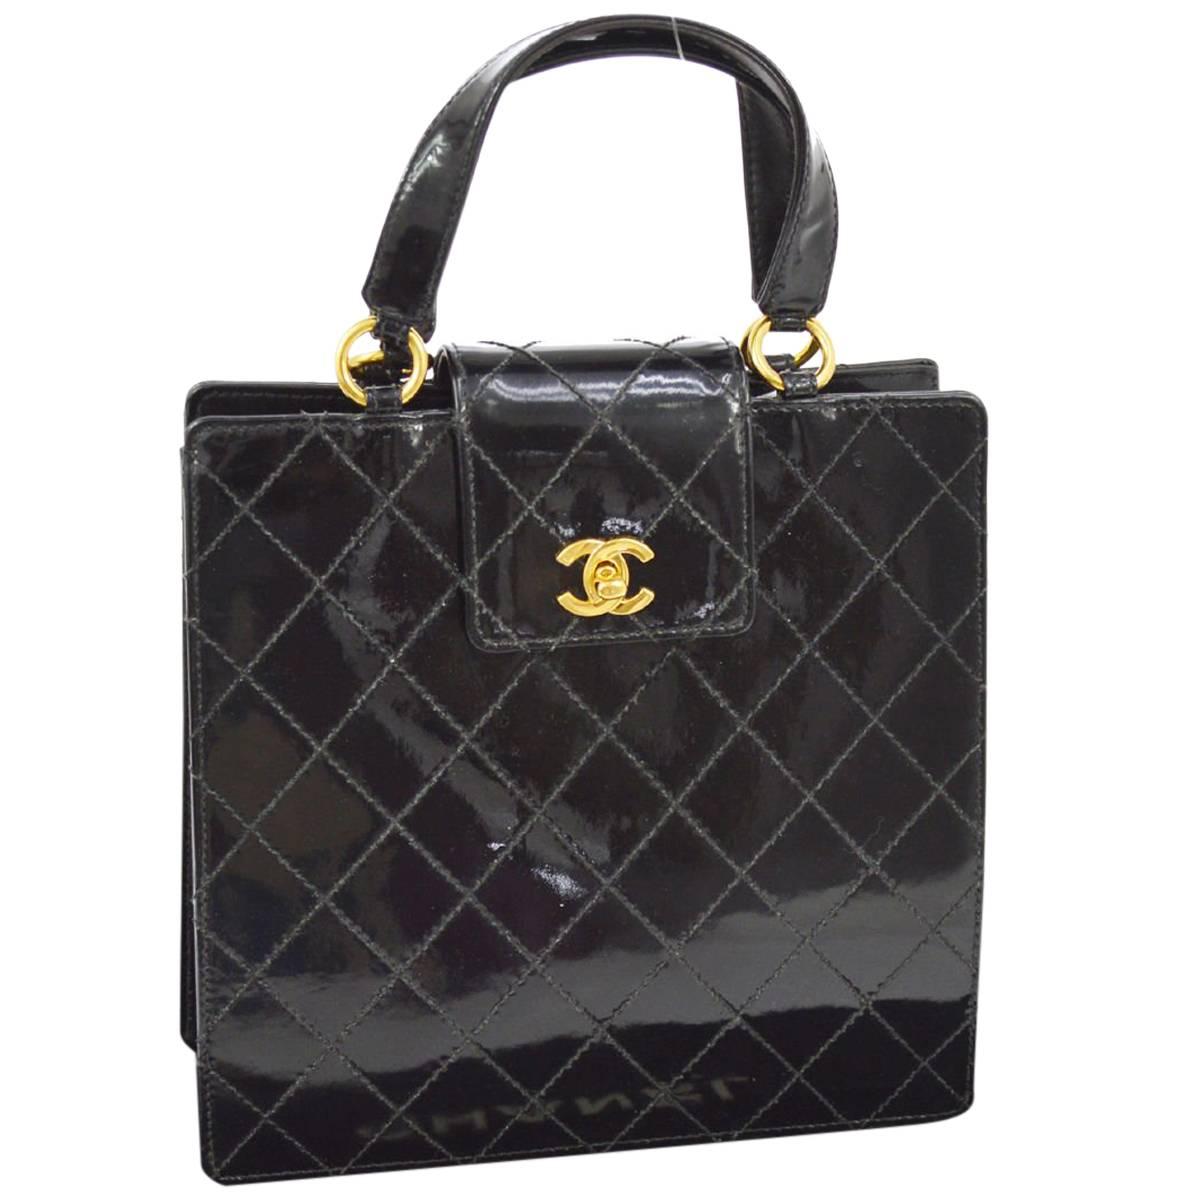 Chanel Vintage Black Patent Leather Top Handle Satchel Evening Bag